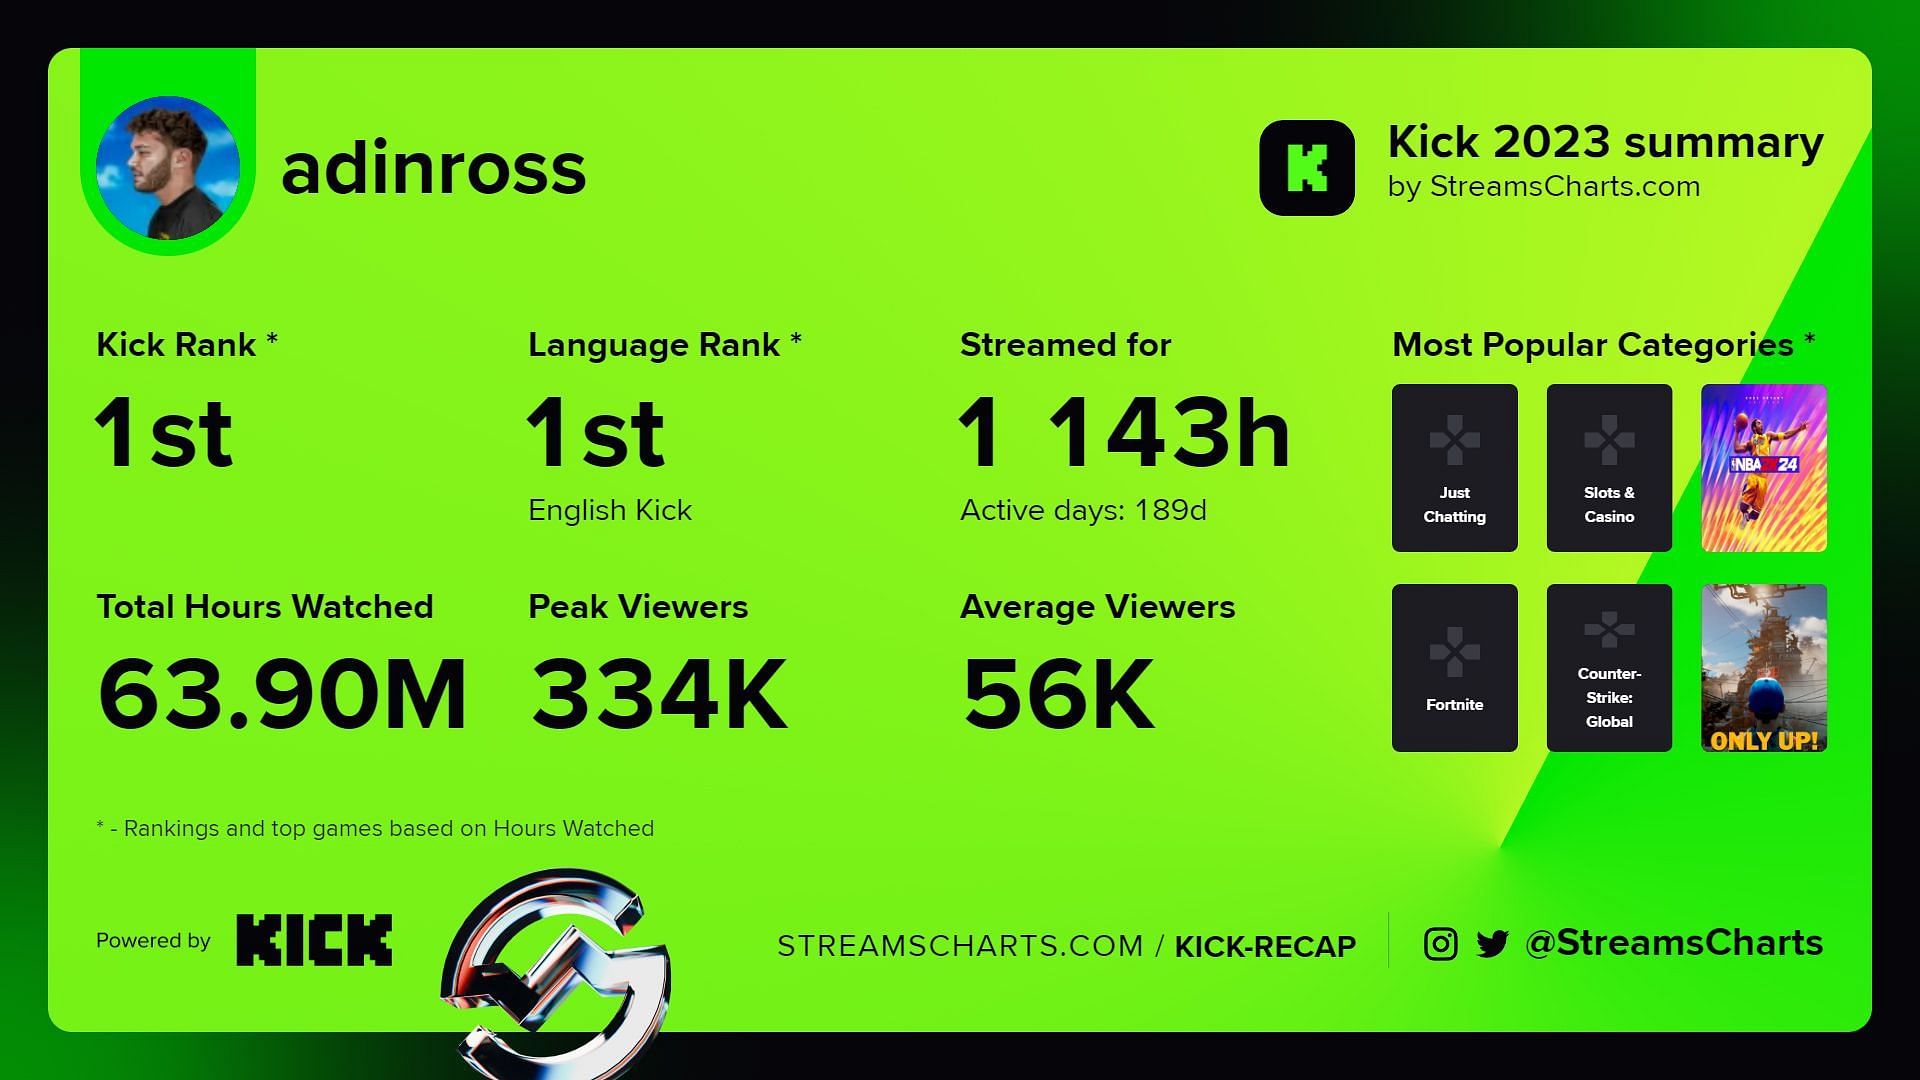 Adin Ross is ranked number one on Kick. (Image via Kick)